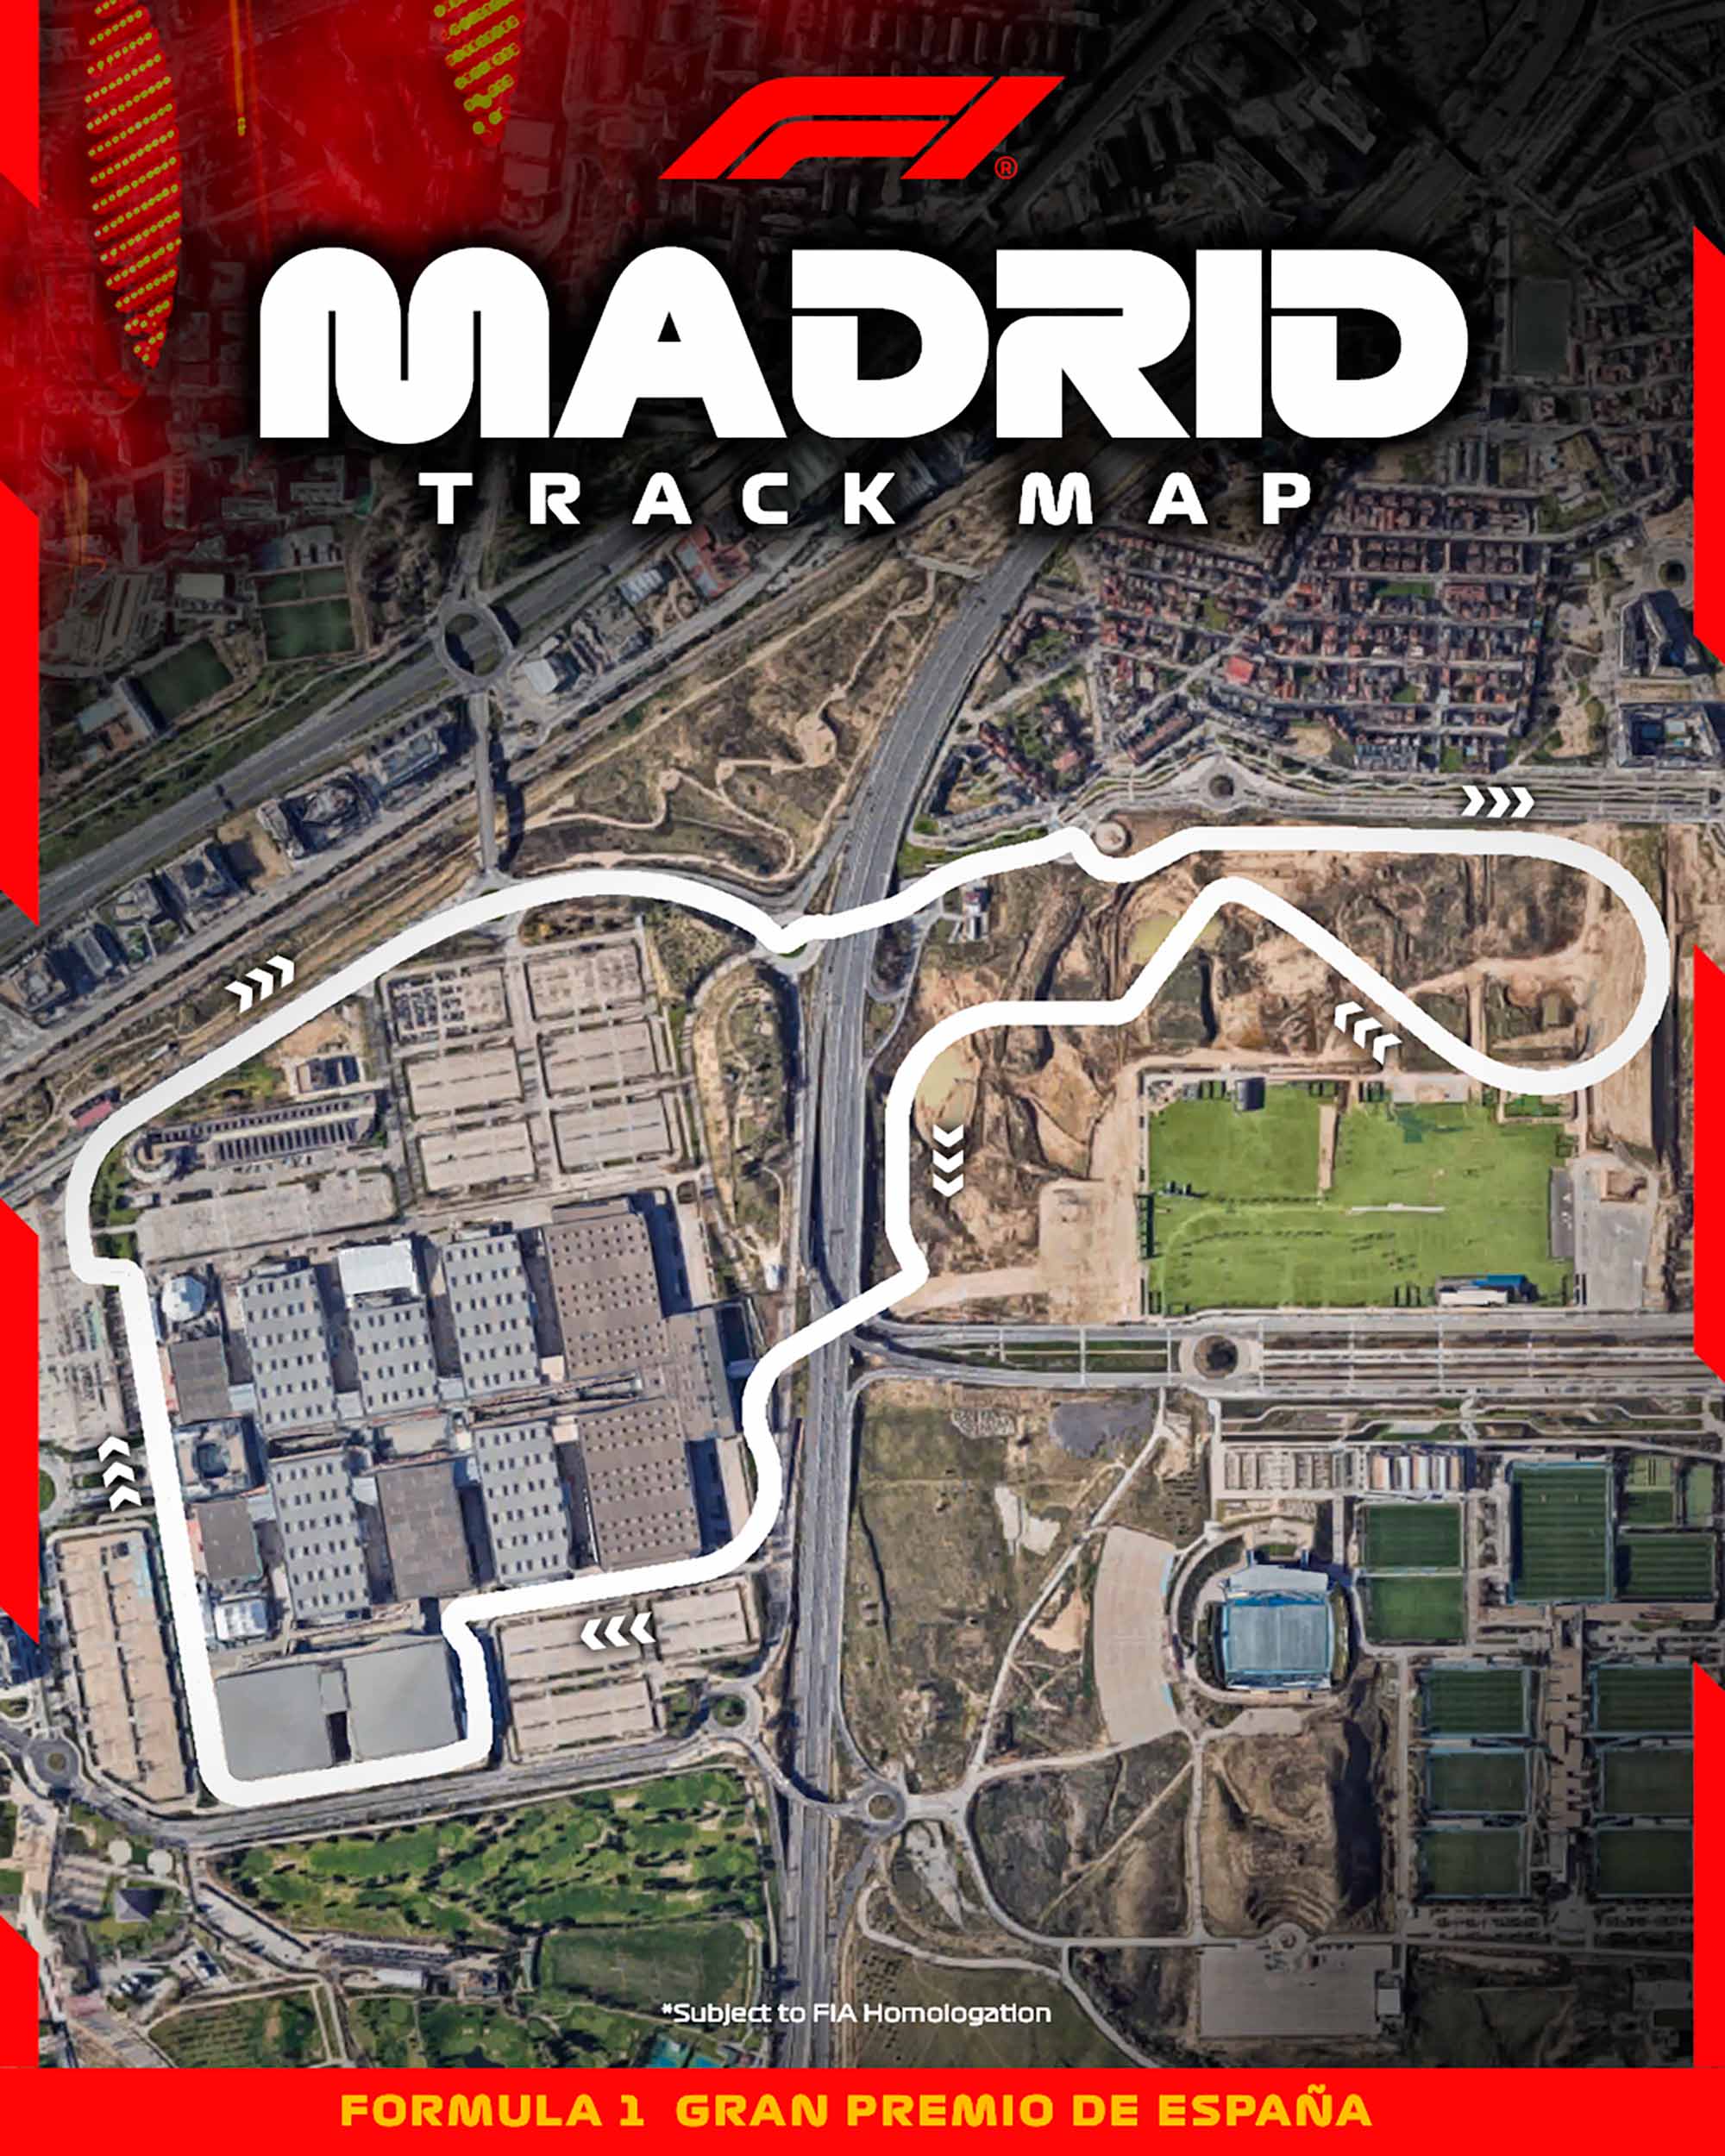 Acordo de 10 anos leva a F1 para as ruas de Madrid; confira o layout do circuito